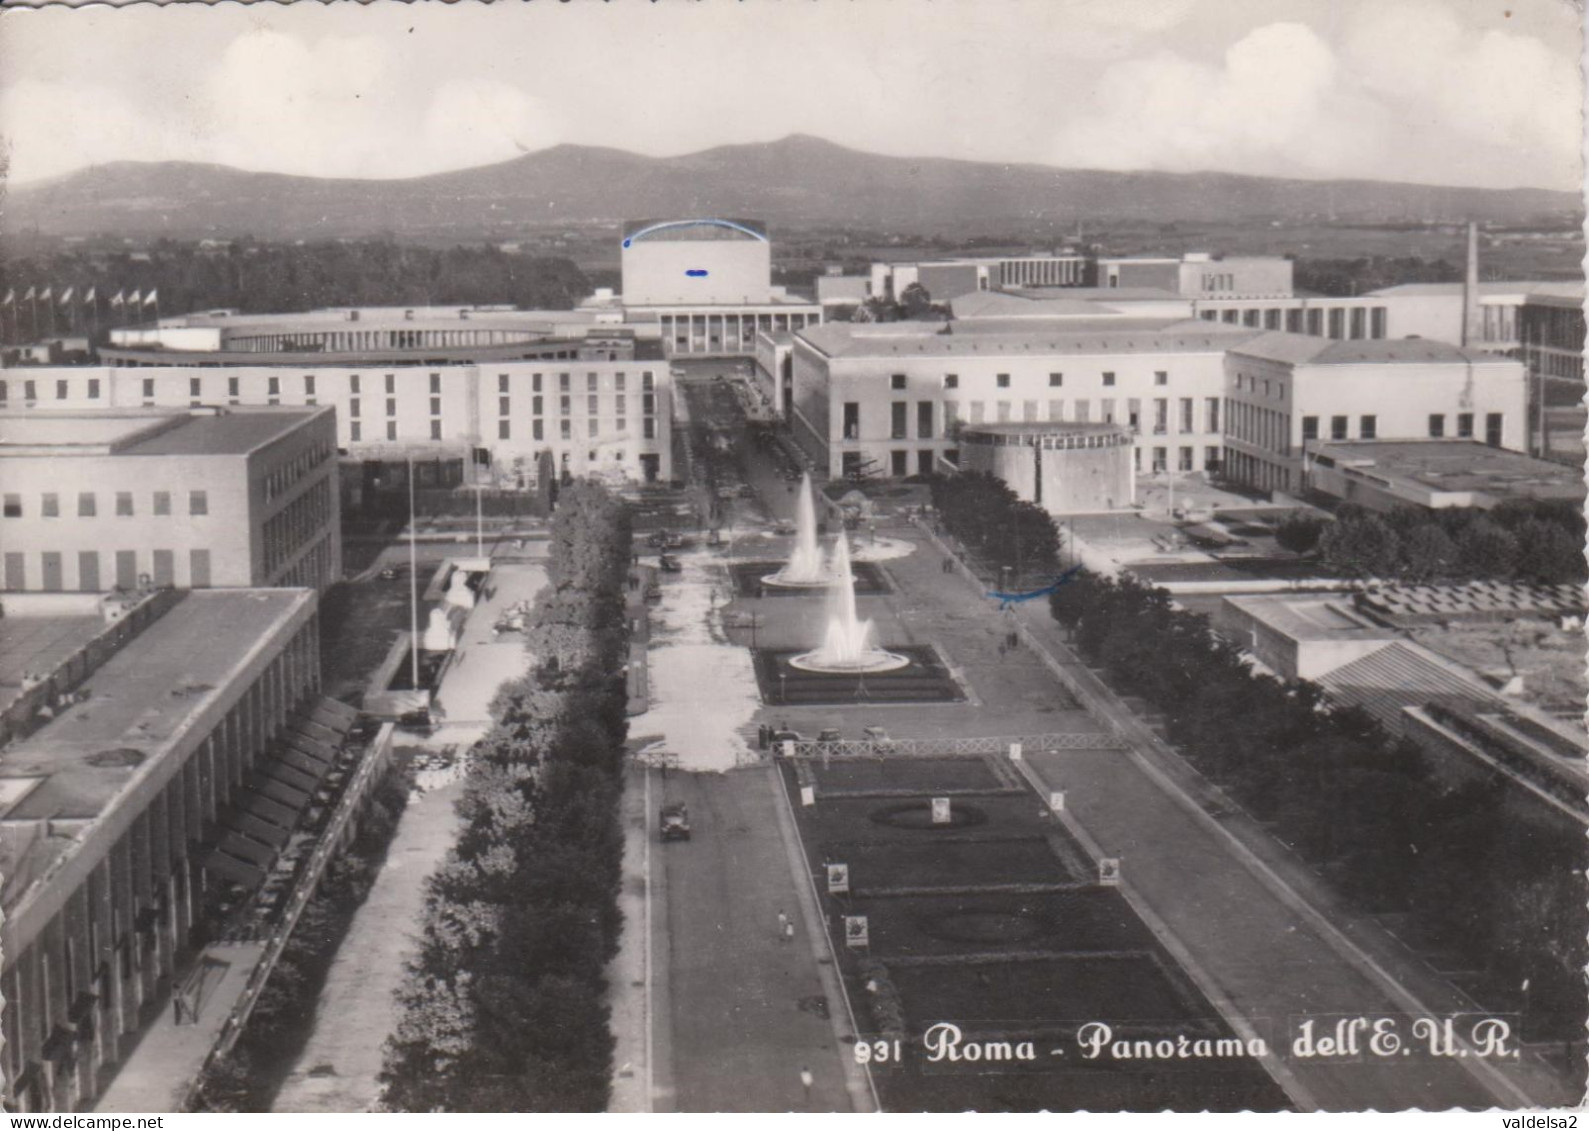 ROMA EUR - PANORAMA DELL'E.U.R. - FONTANE - 1958 - Exposiciones